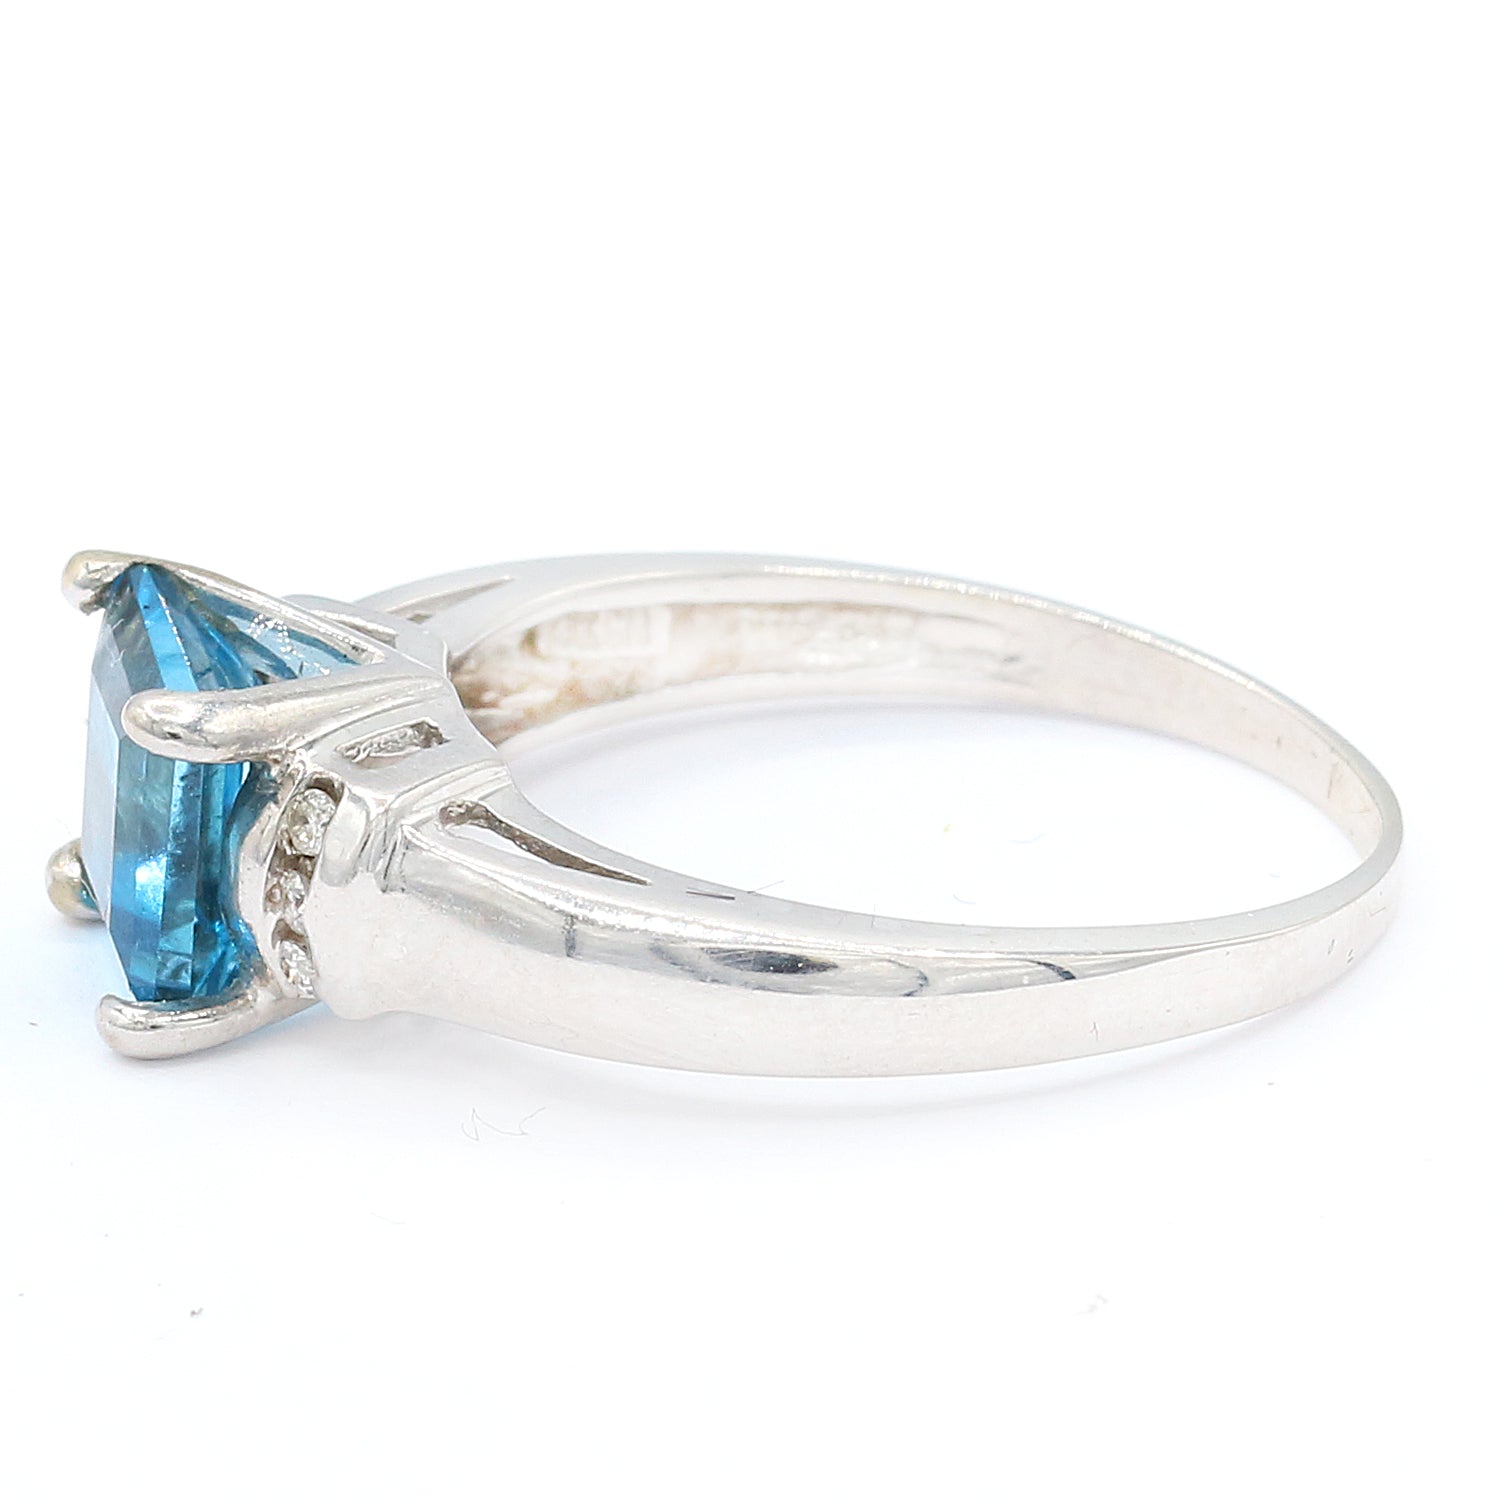 Golden Jewel 14K White Gold 1.71ctw Super Swiss Blue Topaz & Diamond Ring